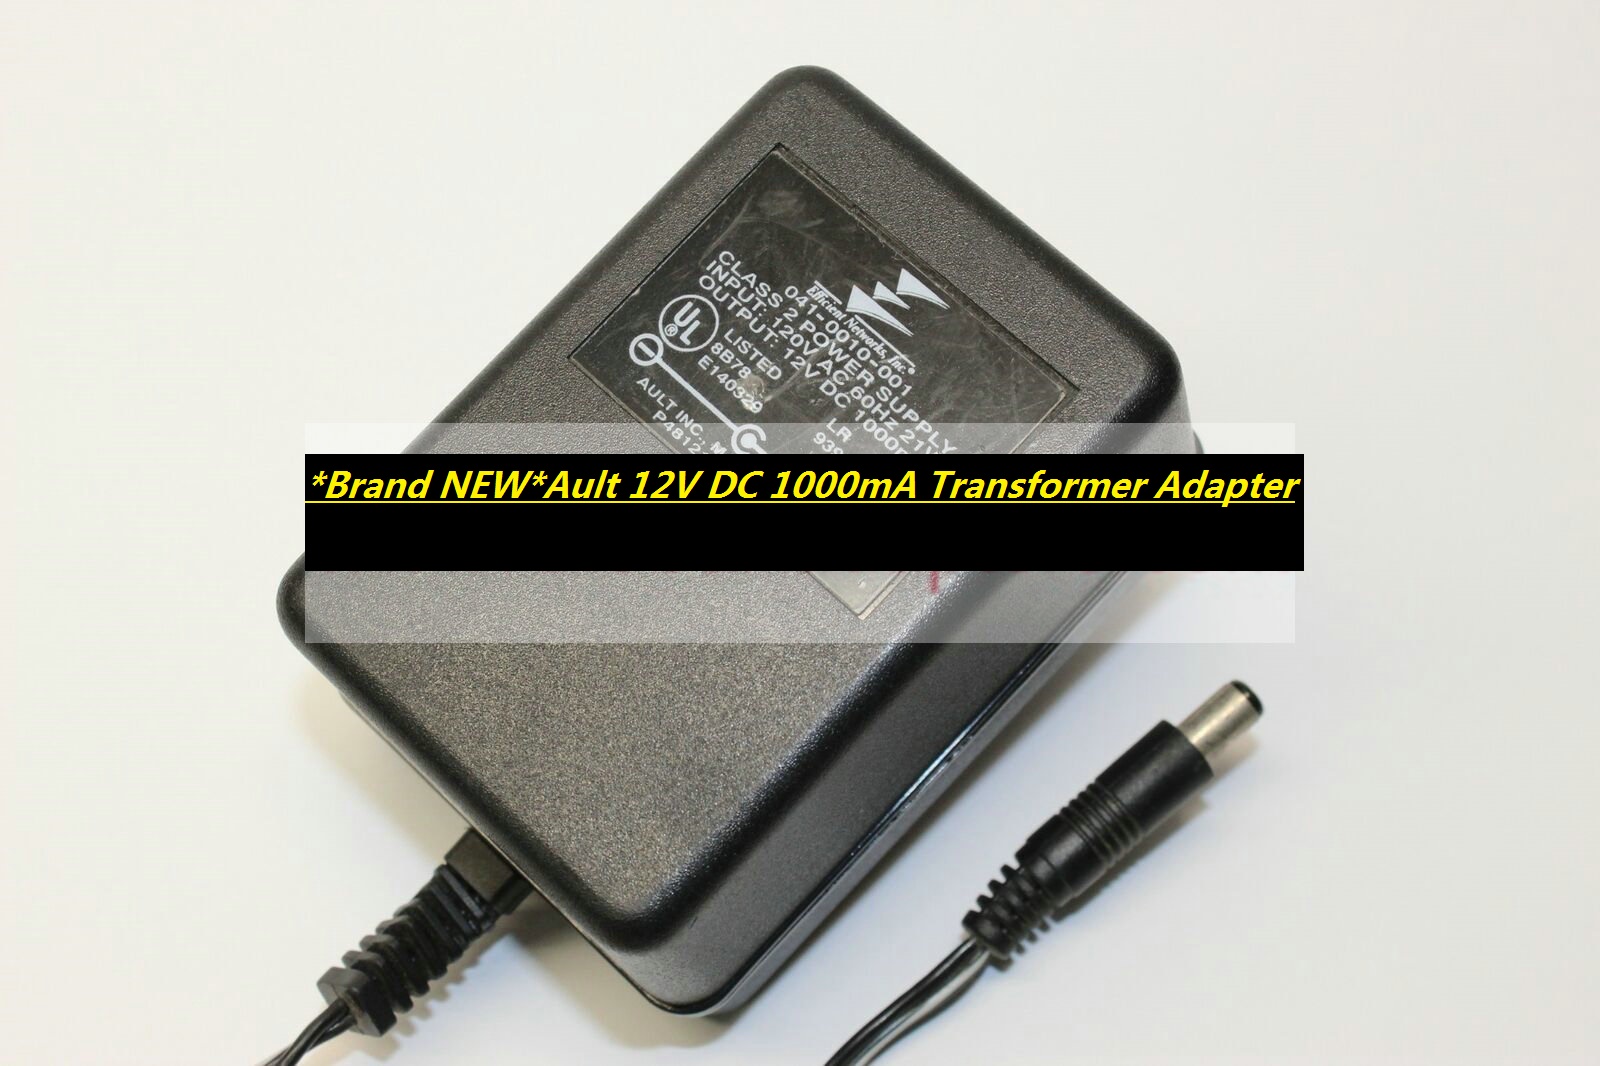 *Brand NEW*Ault 041-0010-001 Class 2 Power Supply 12V DC 1000mA Transformer Adapter